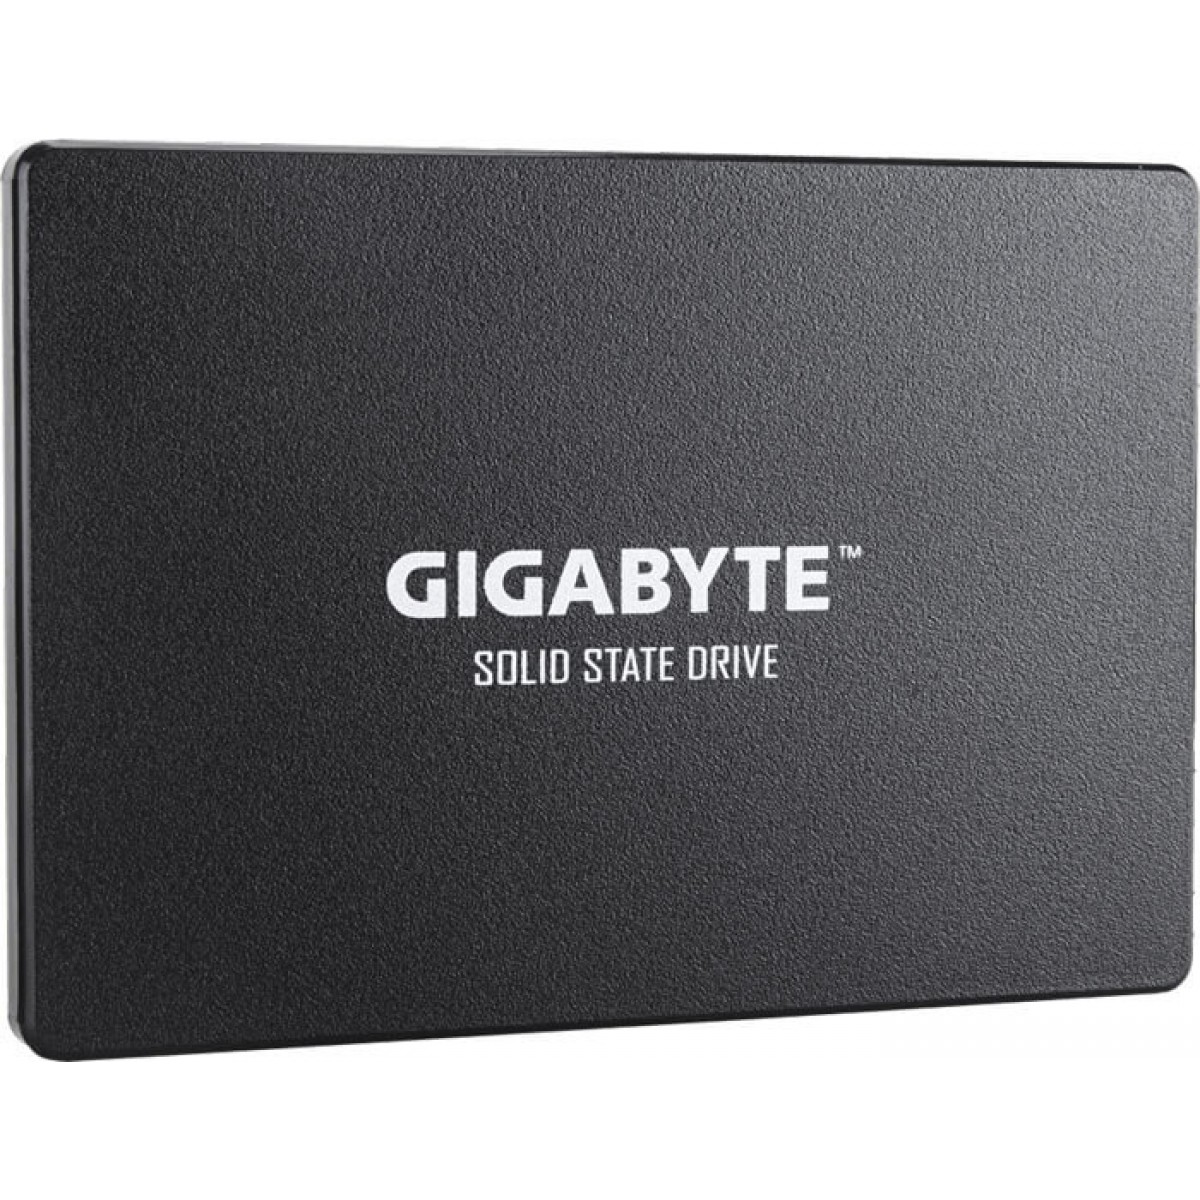 SSD Gigabyte, 120GB, Sata III, Leitura 500MBs e Gravação 380MBs, GP-GSTFS31120GNTD